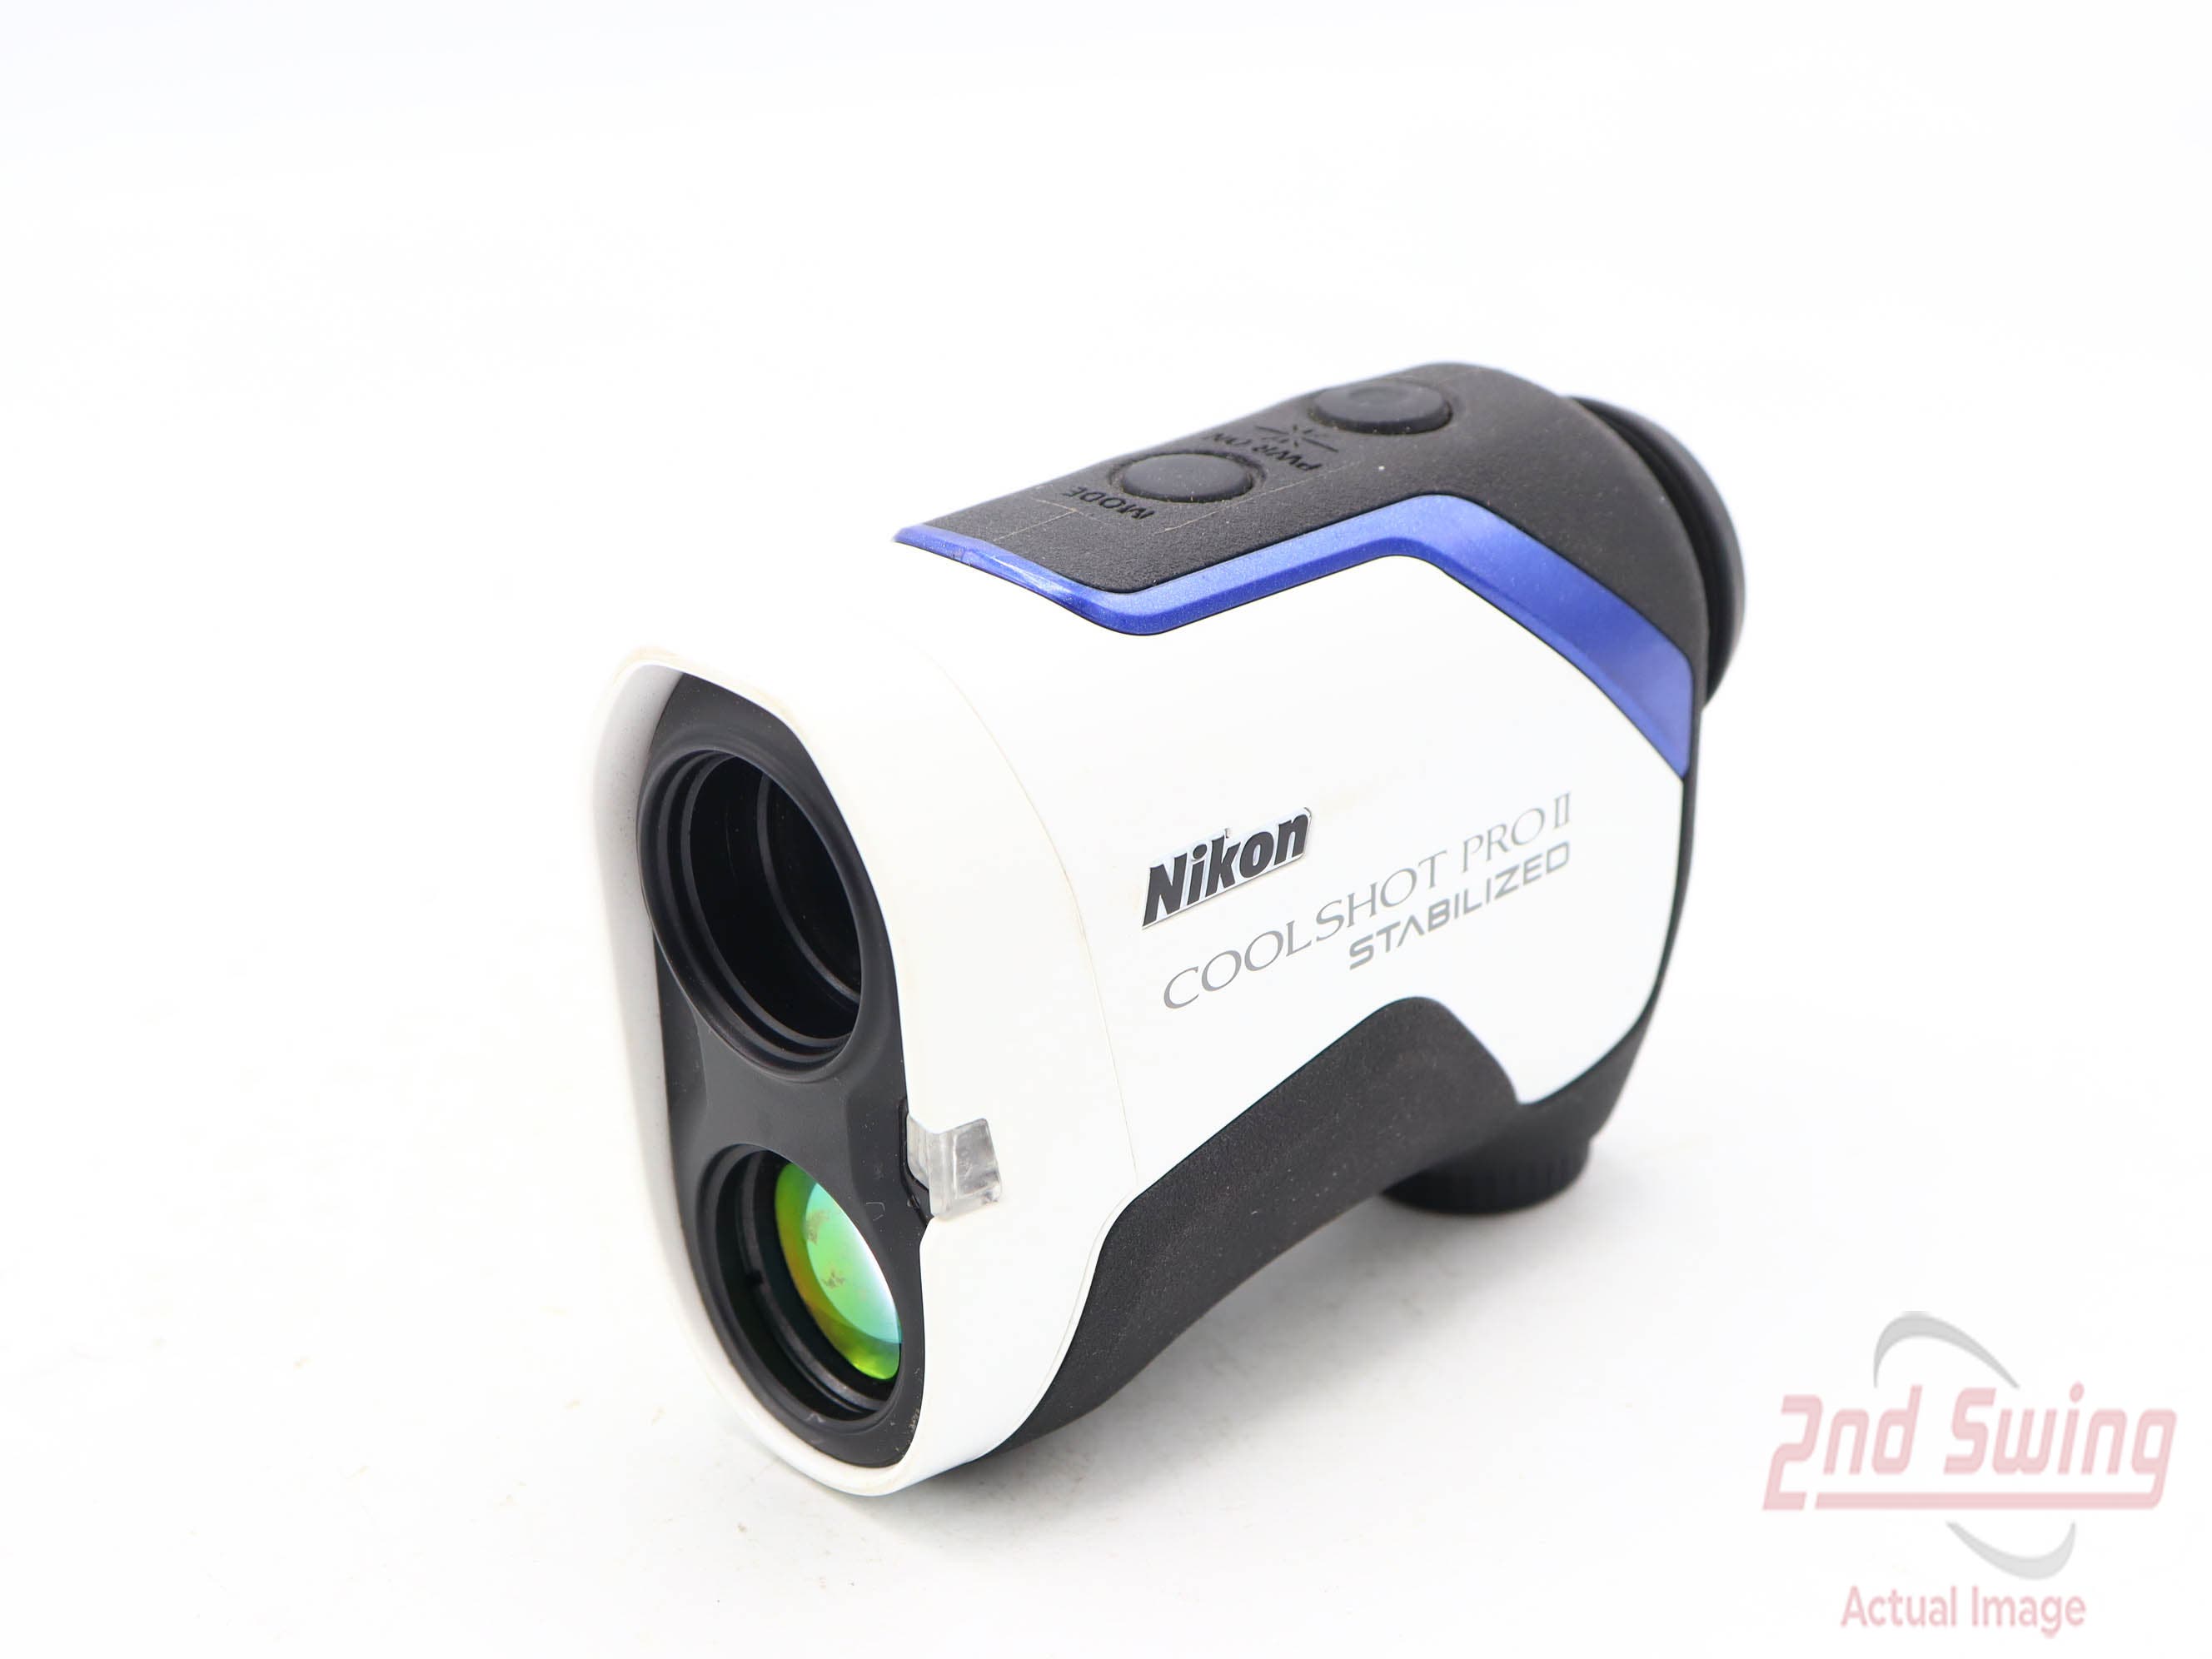 Nikon Coolshot PROII Stabilized Golf GPS & Rangefinders (D